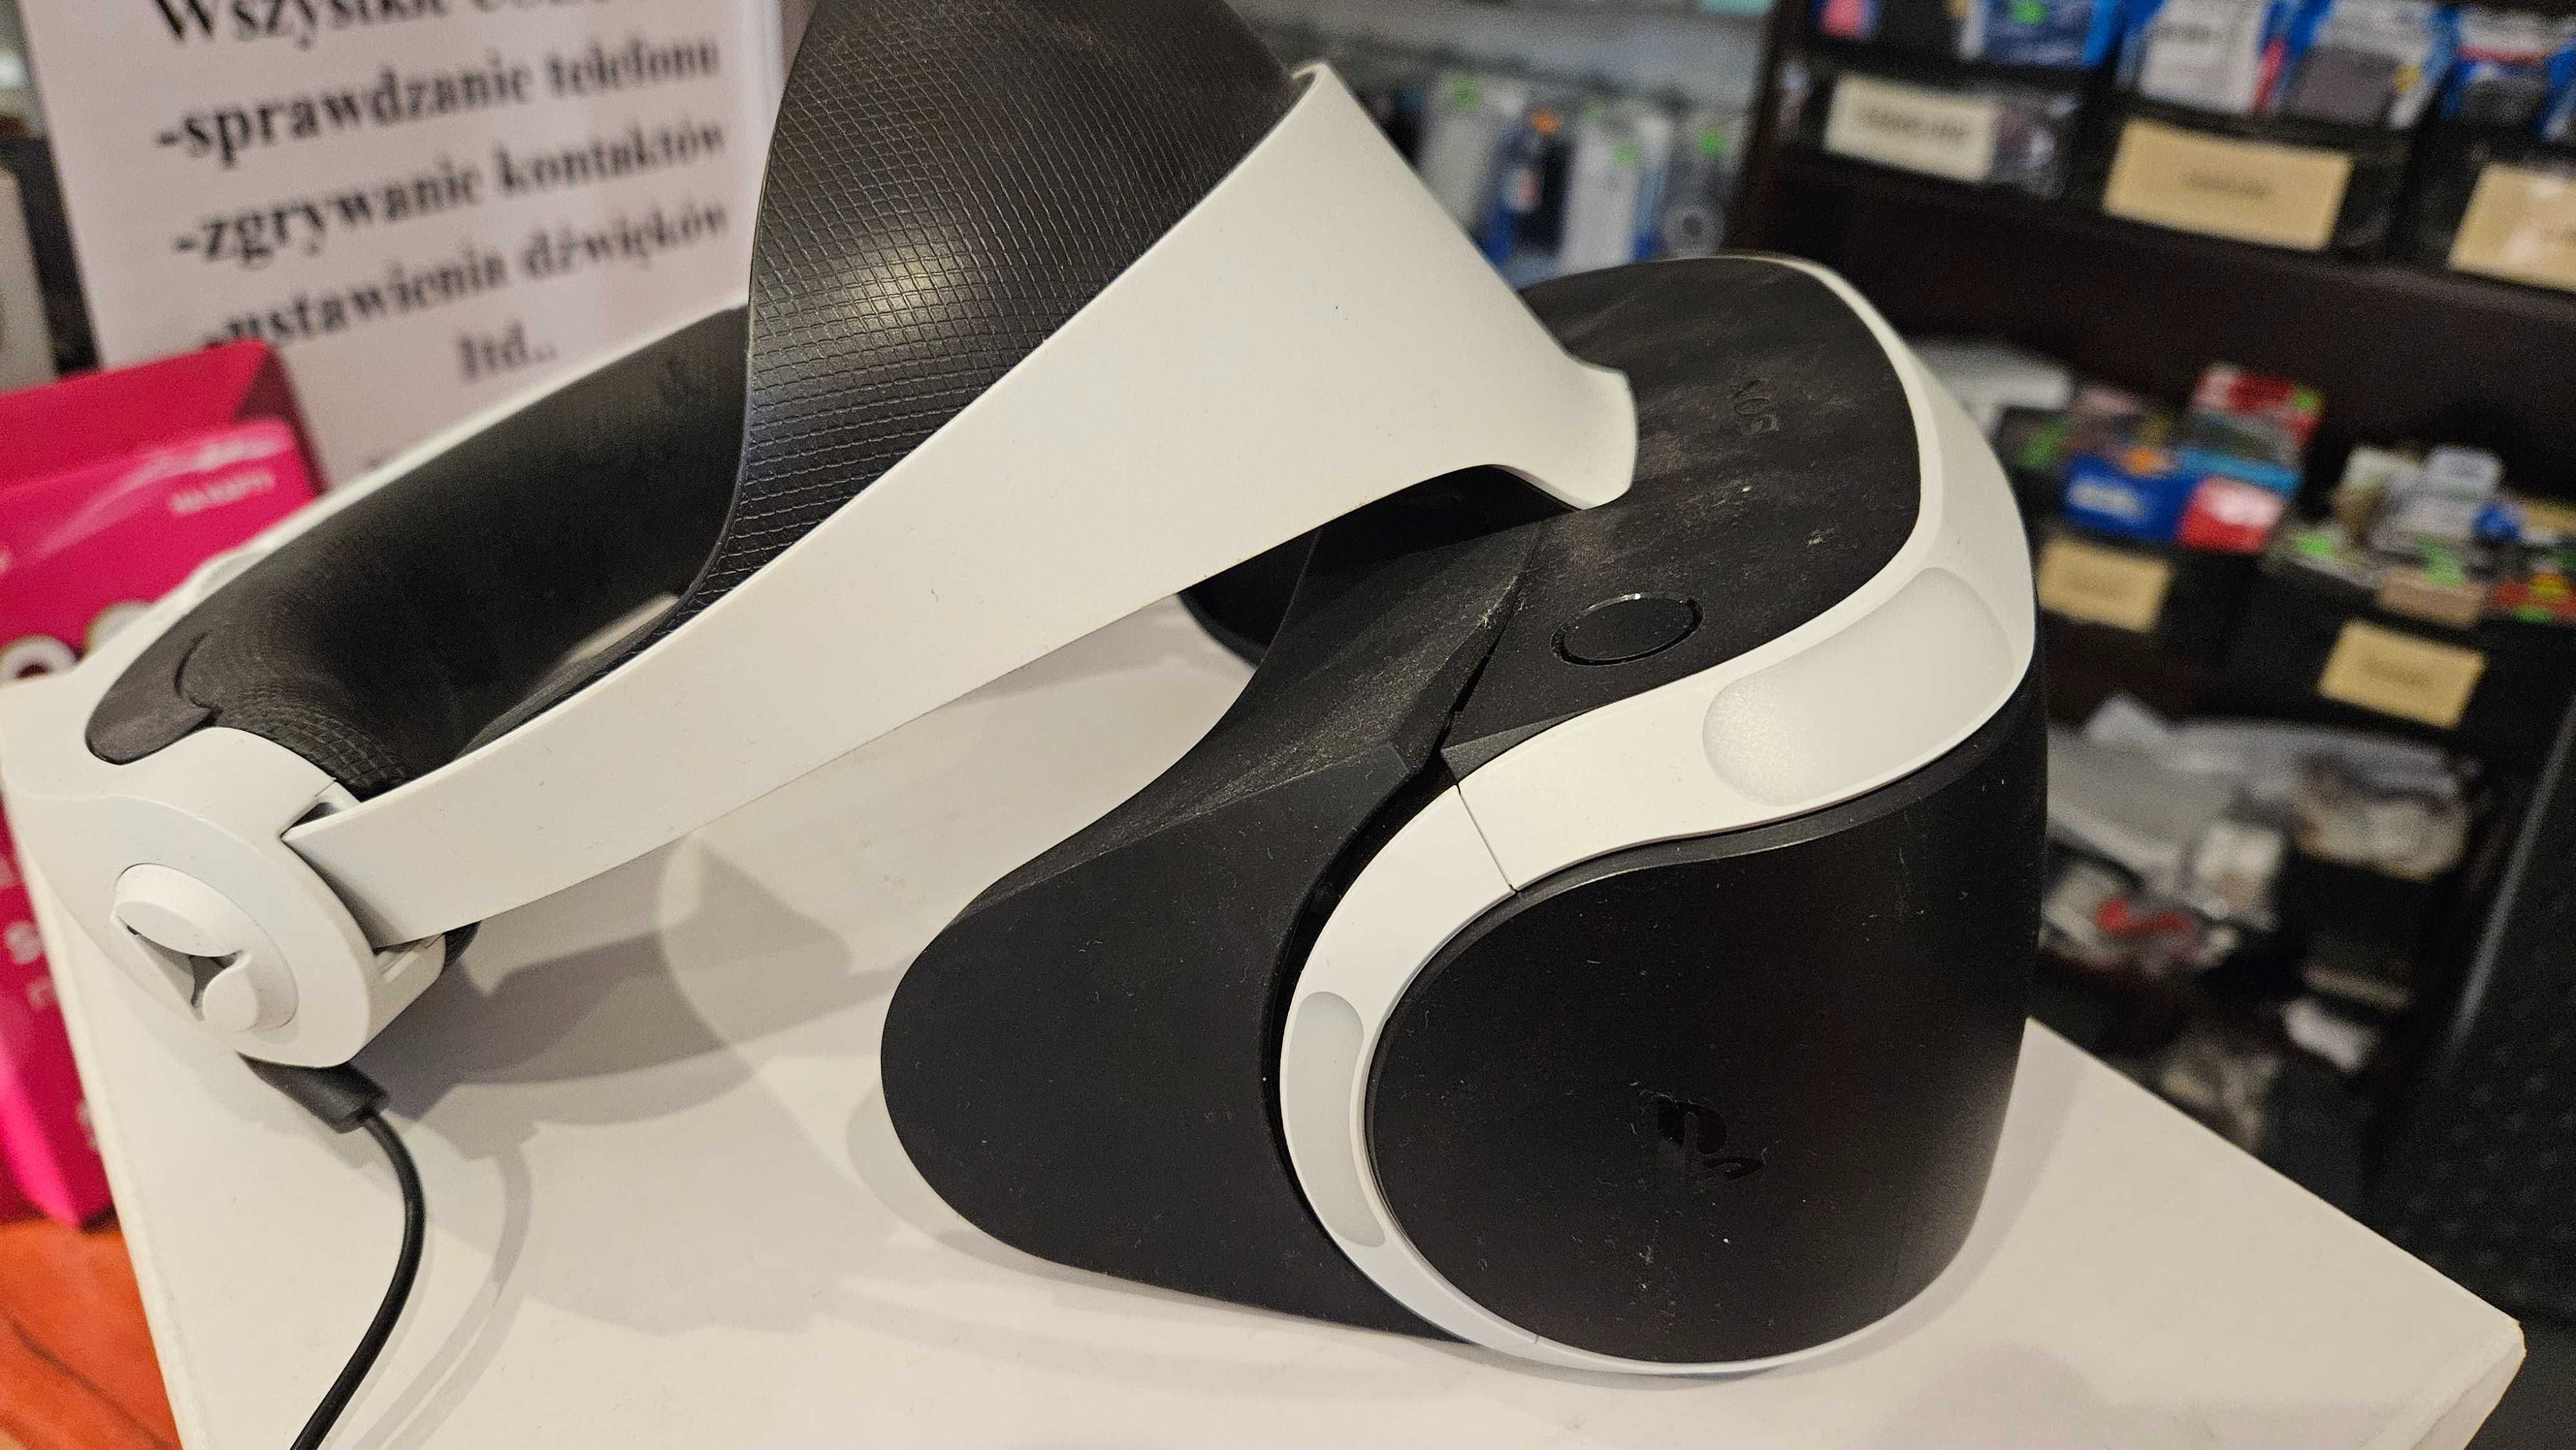 Gogle PlayStation VR v2 - komplet -okazja